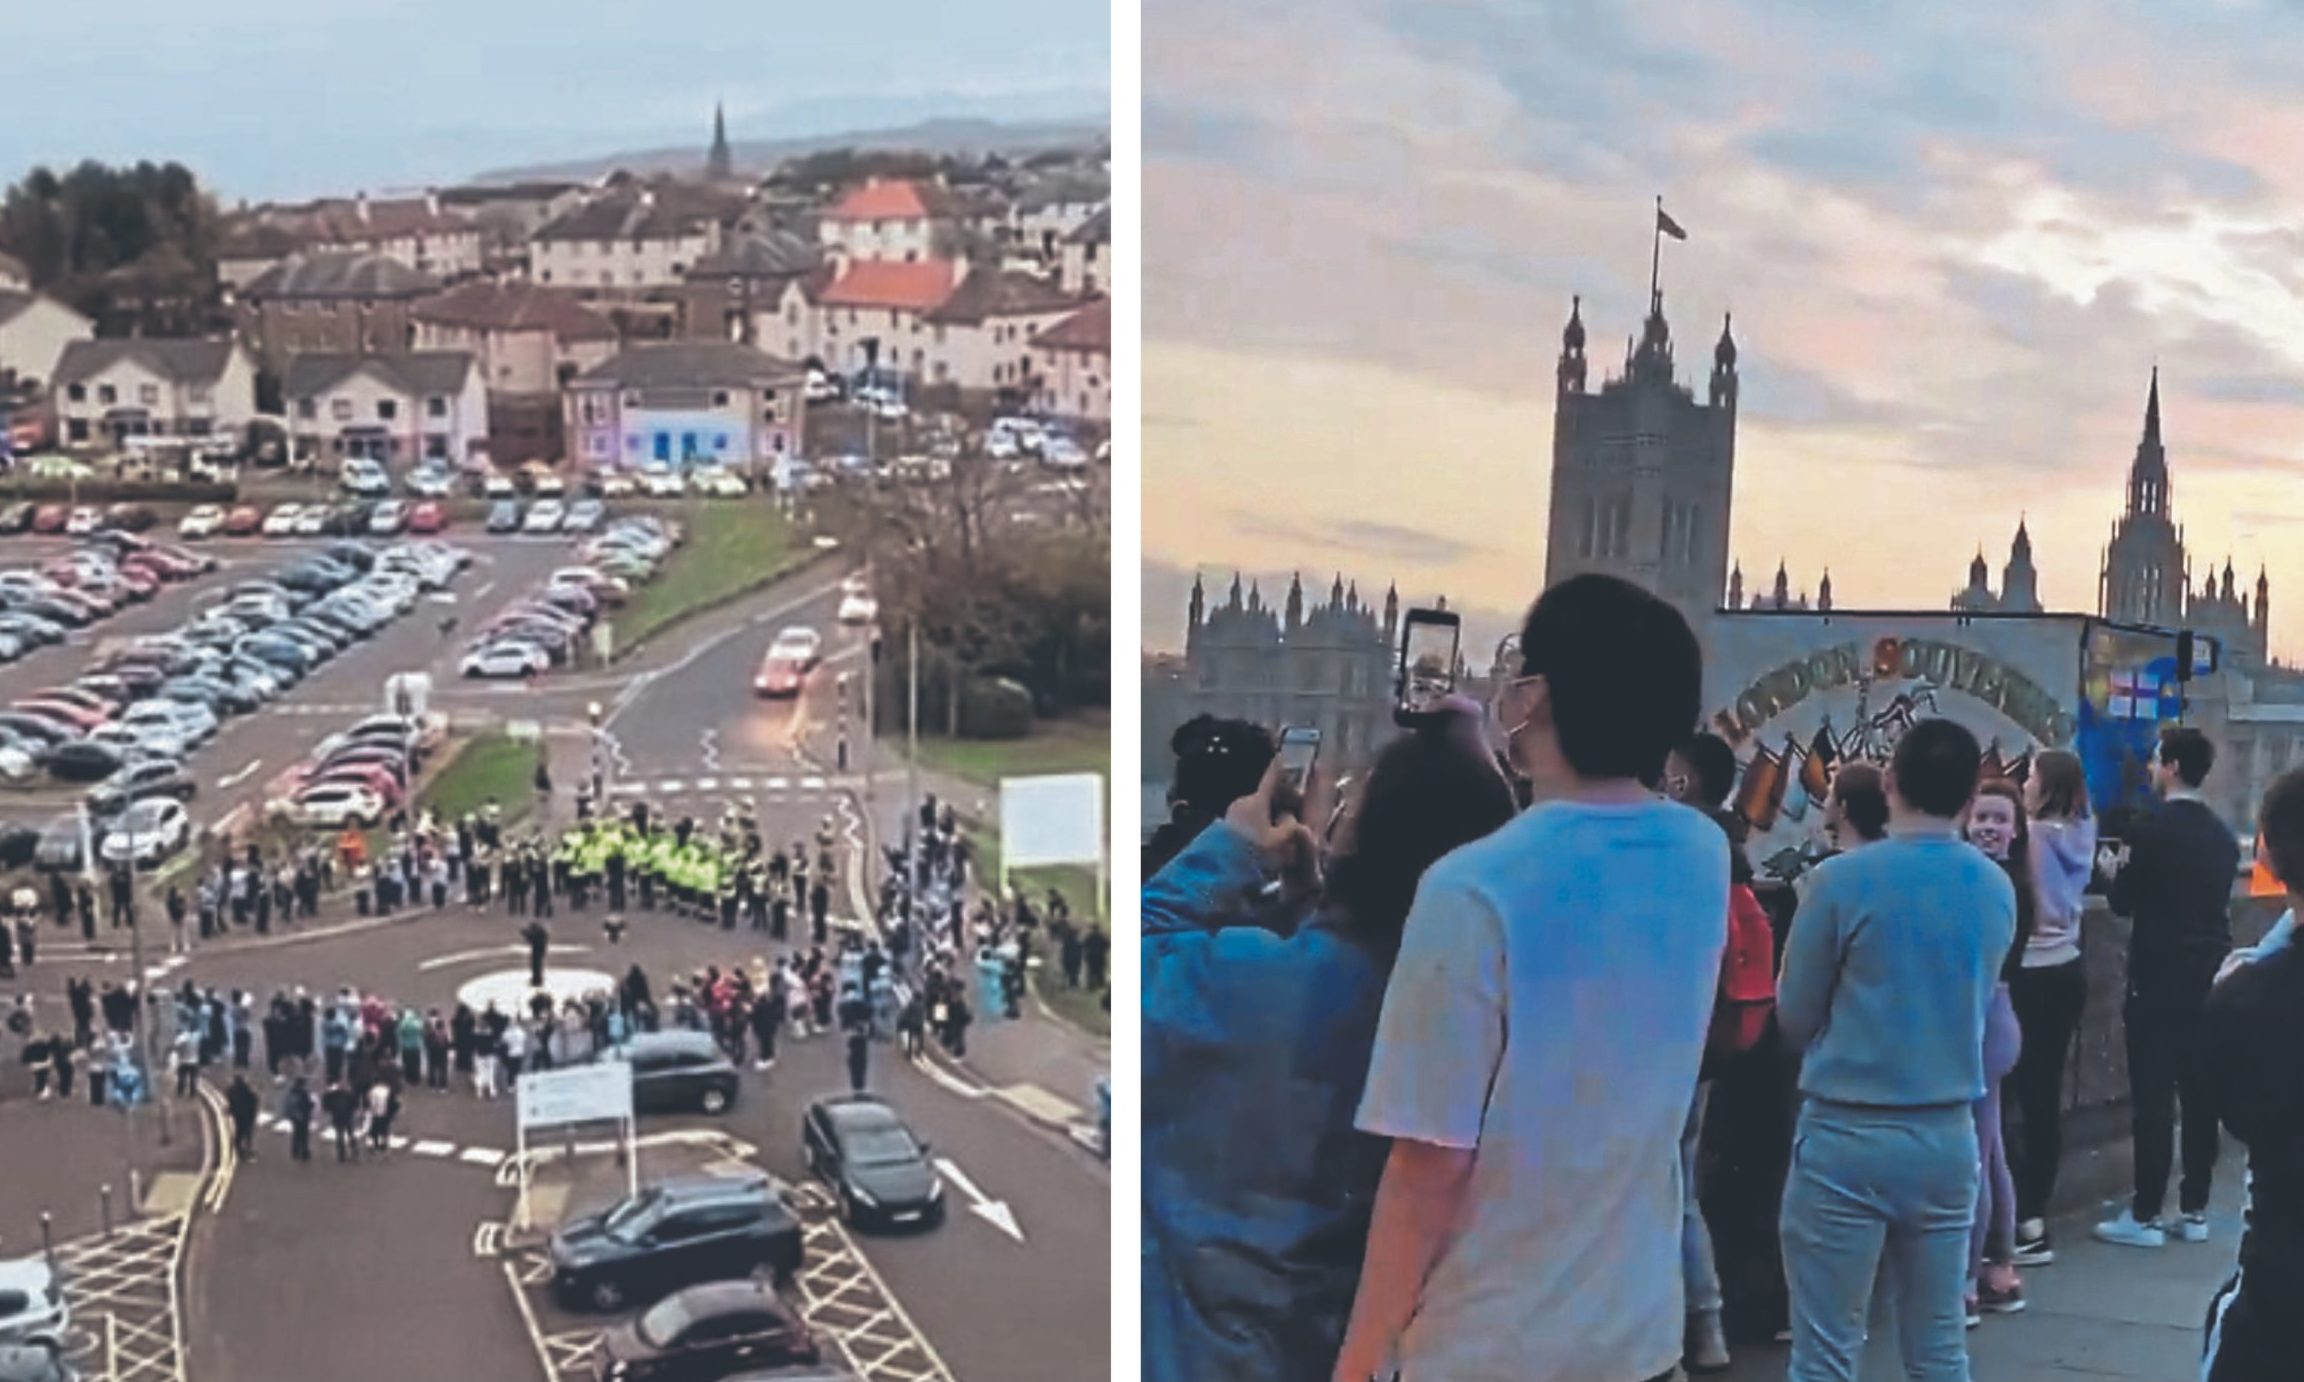 Left: The celebration outside Victoria Hospital in Kirkcaldy. Right: the impromptu gathering on Westminster Bridge.